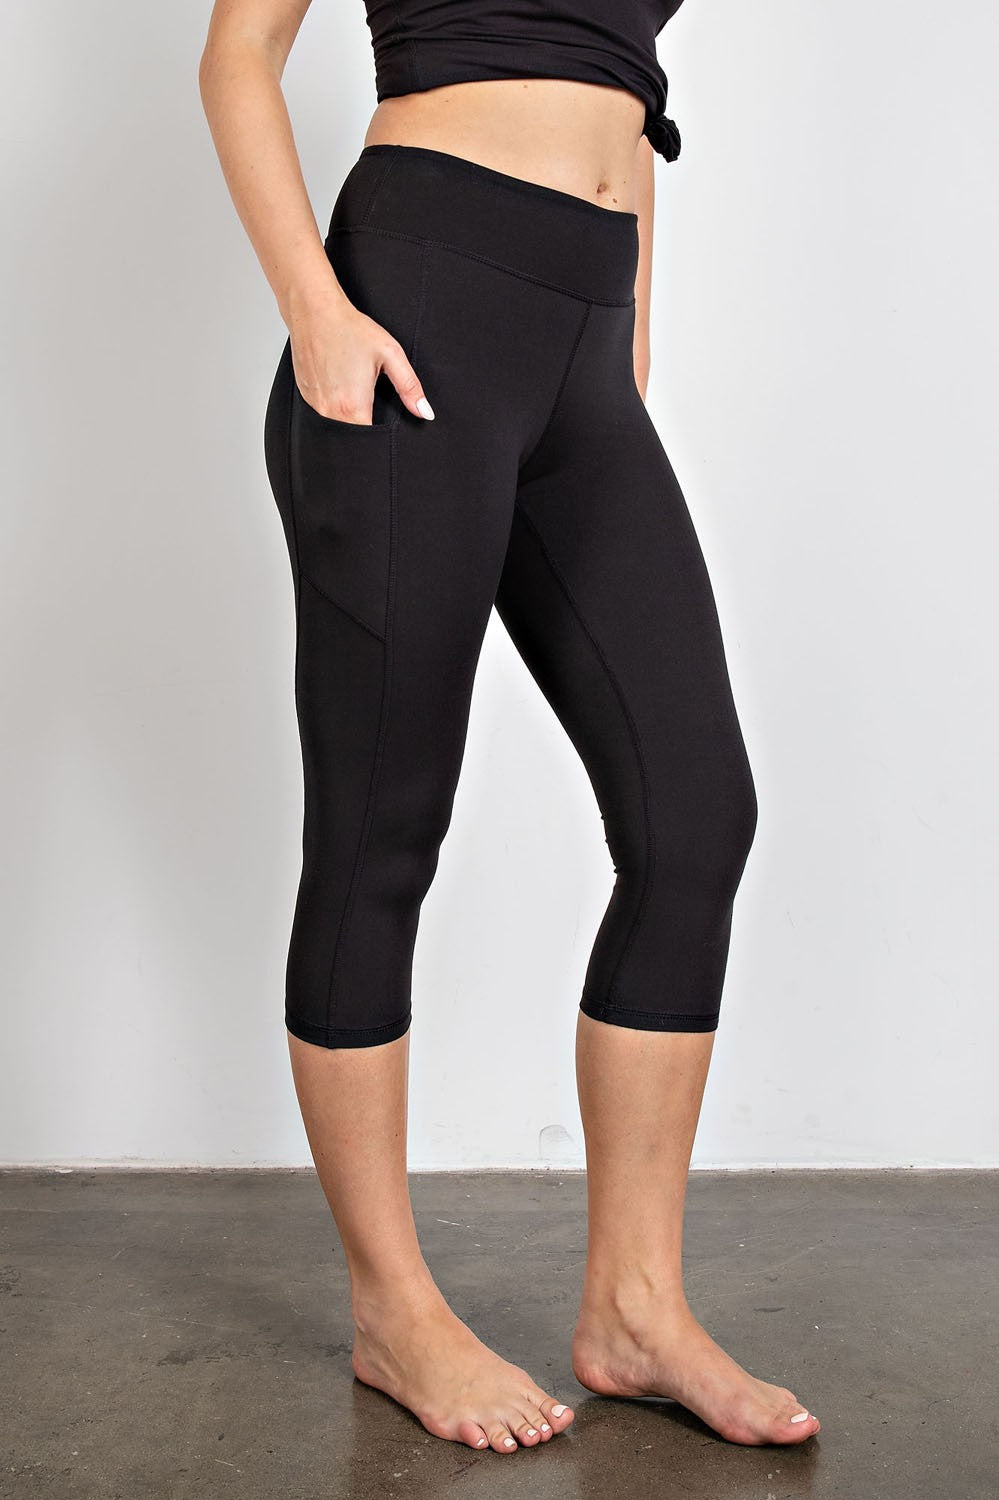 Capri Length Yoga Pants with Pockets